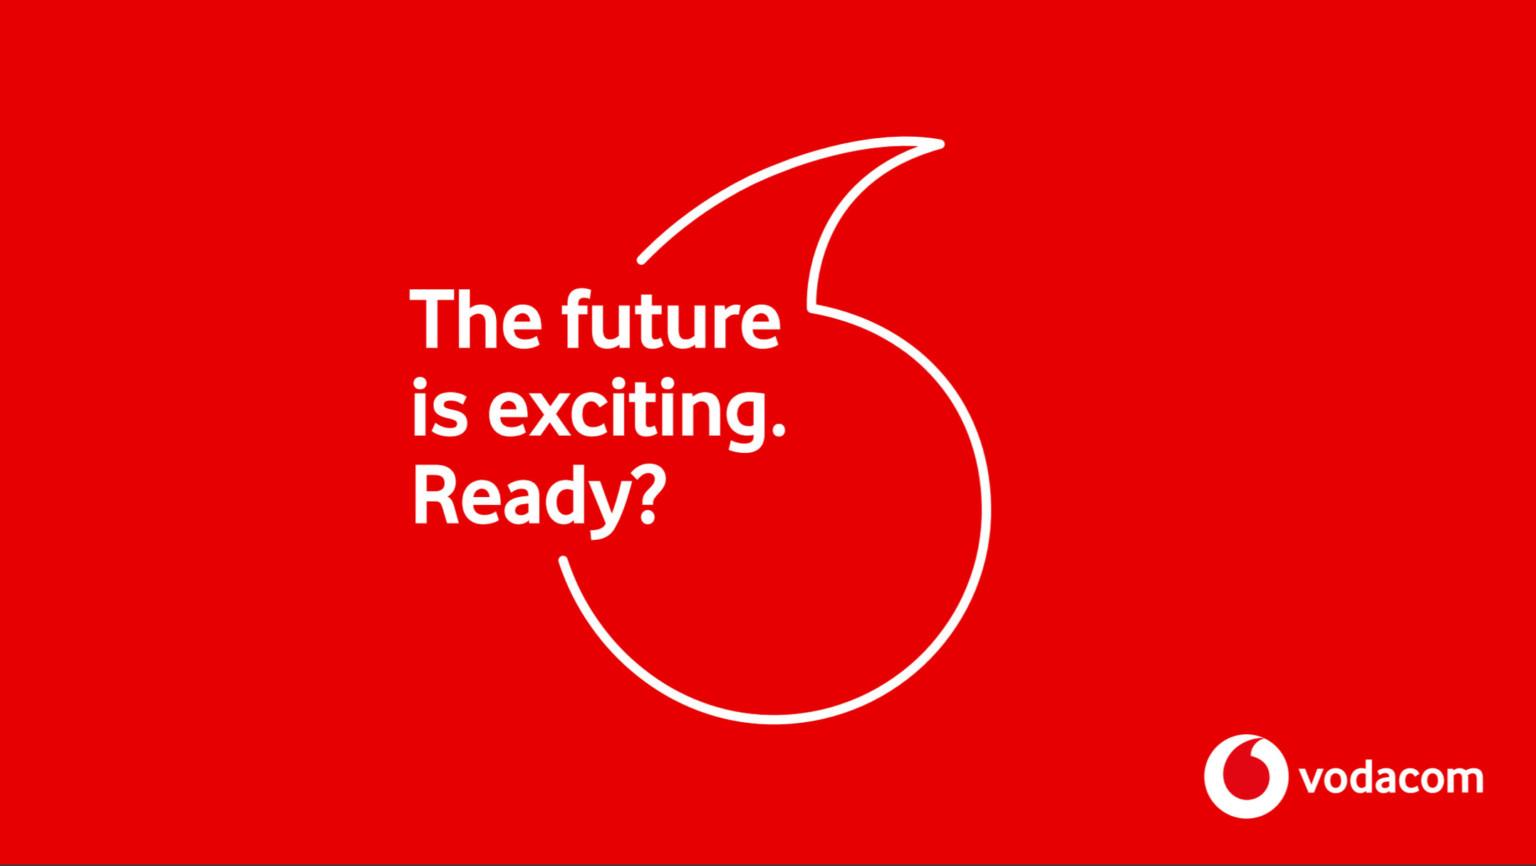 Vodacom Logo - Vodacom Rebranding Outside Of Mobile With Digital Future In Mind